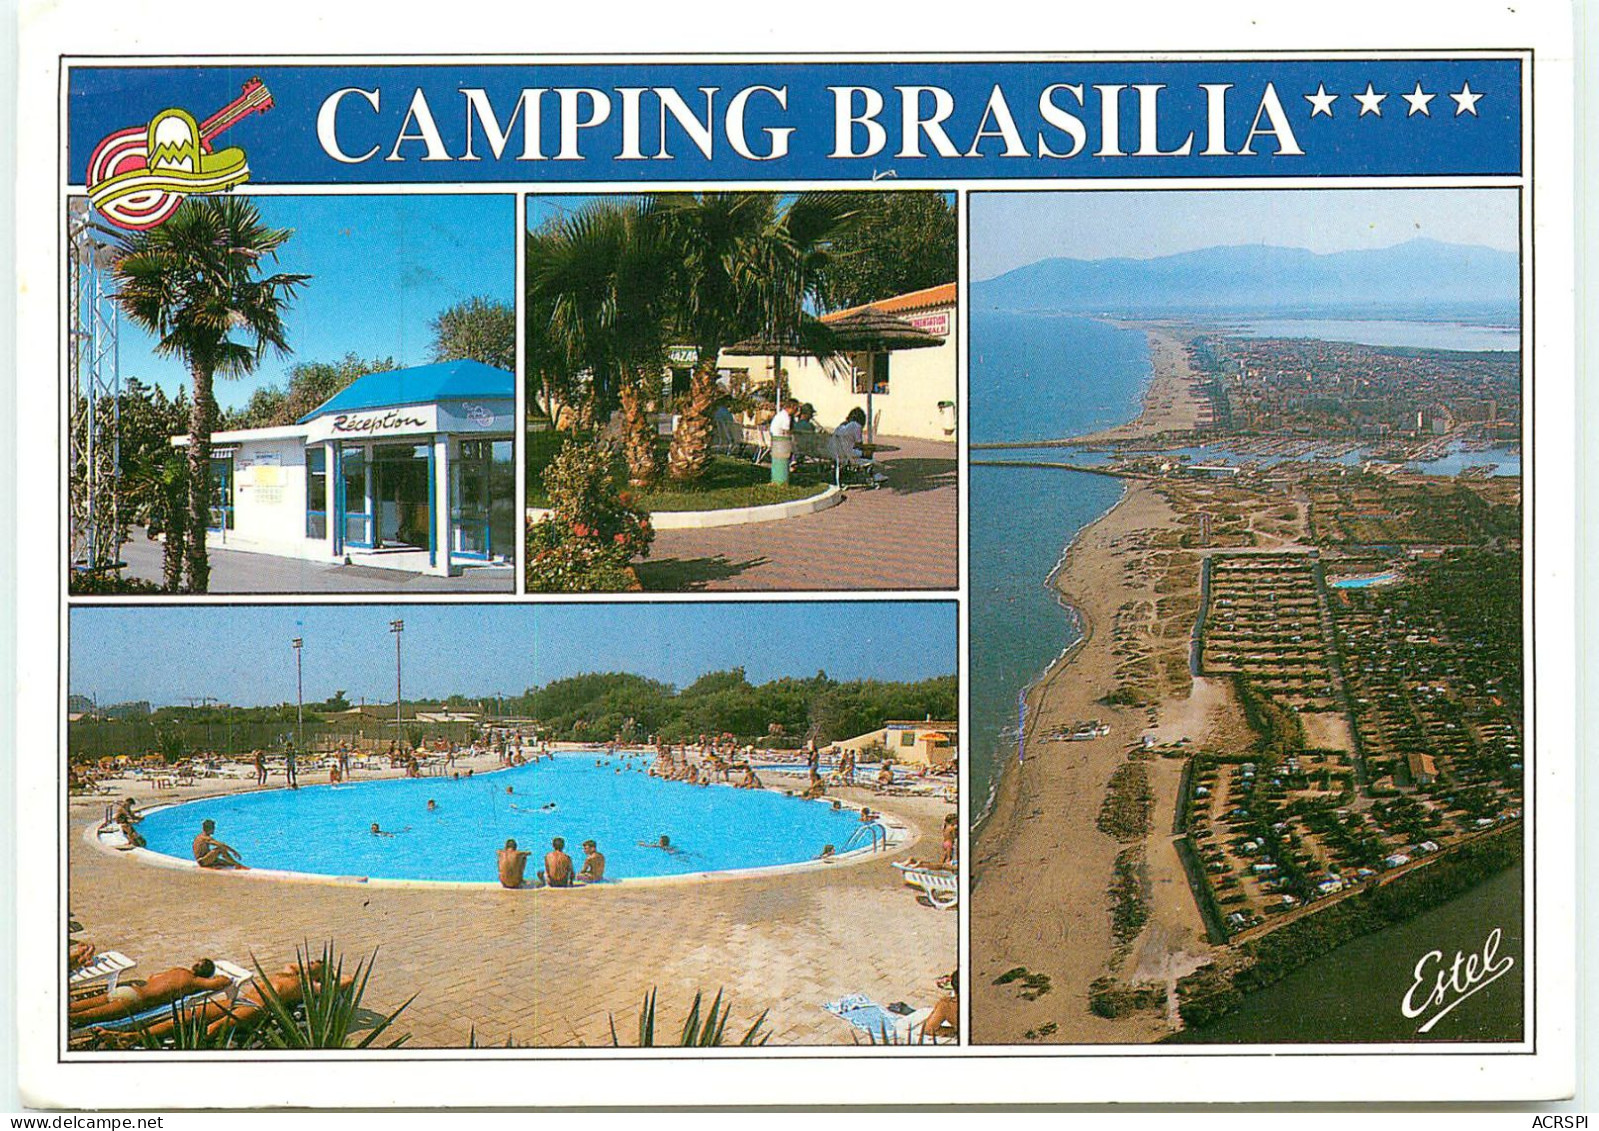 CANET EN ROUSILLON Camping Caravaning International Le Brasilia   SS 1351 - Canet En Roussillon